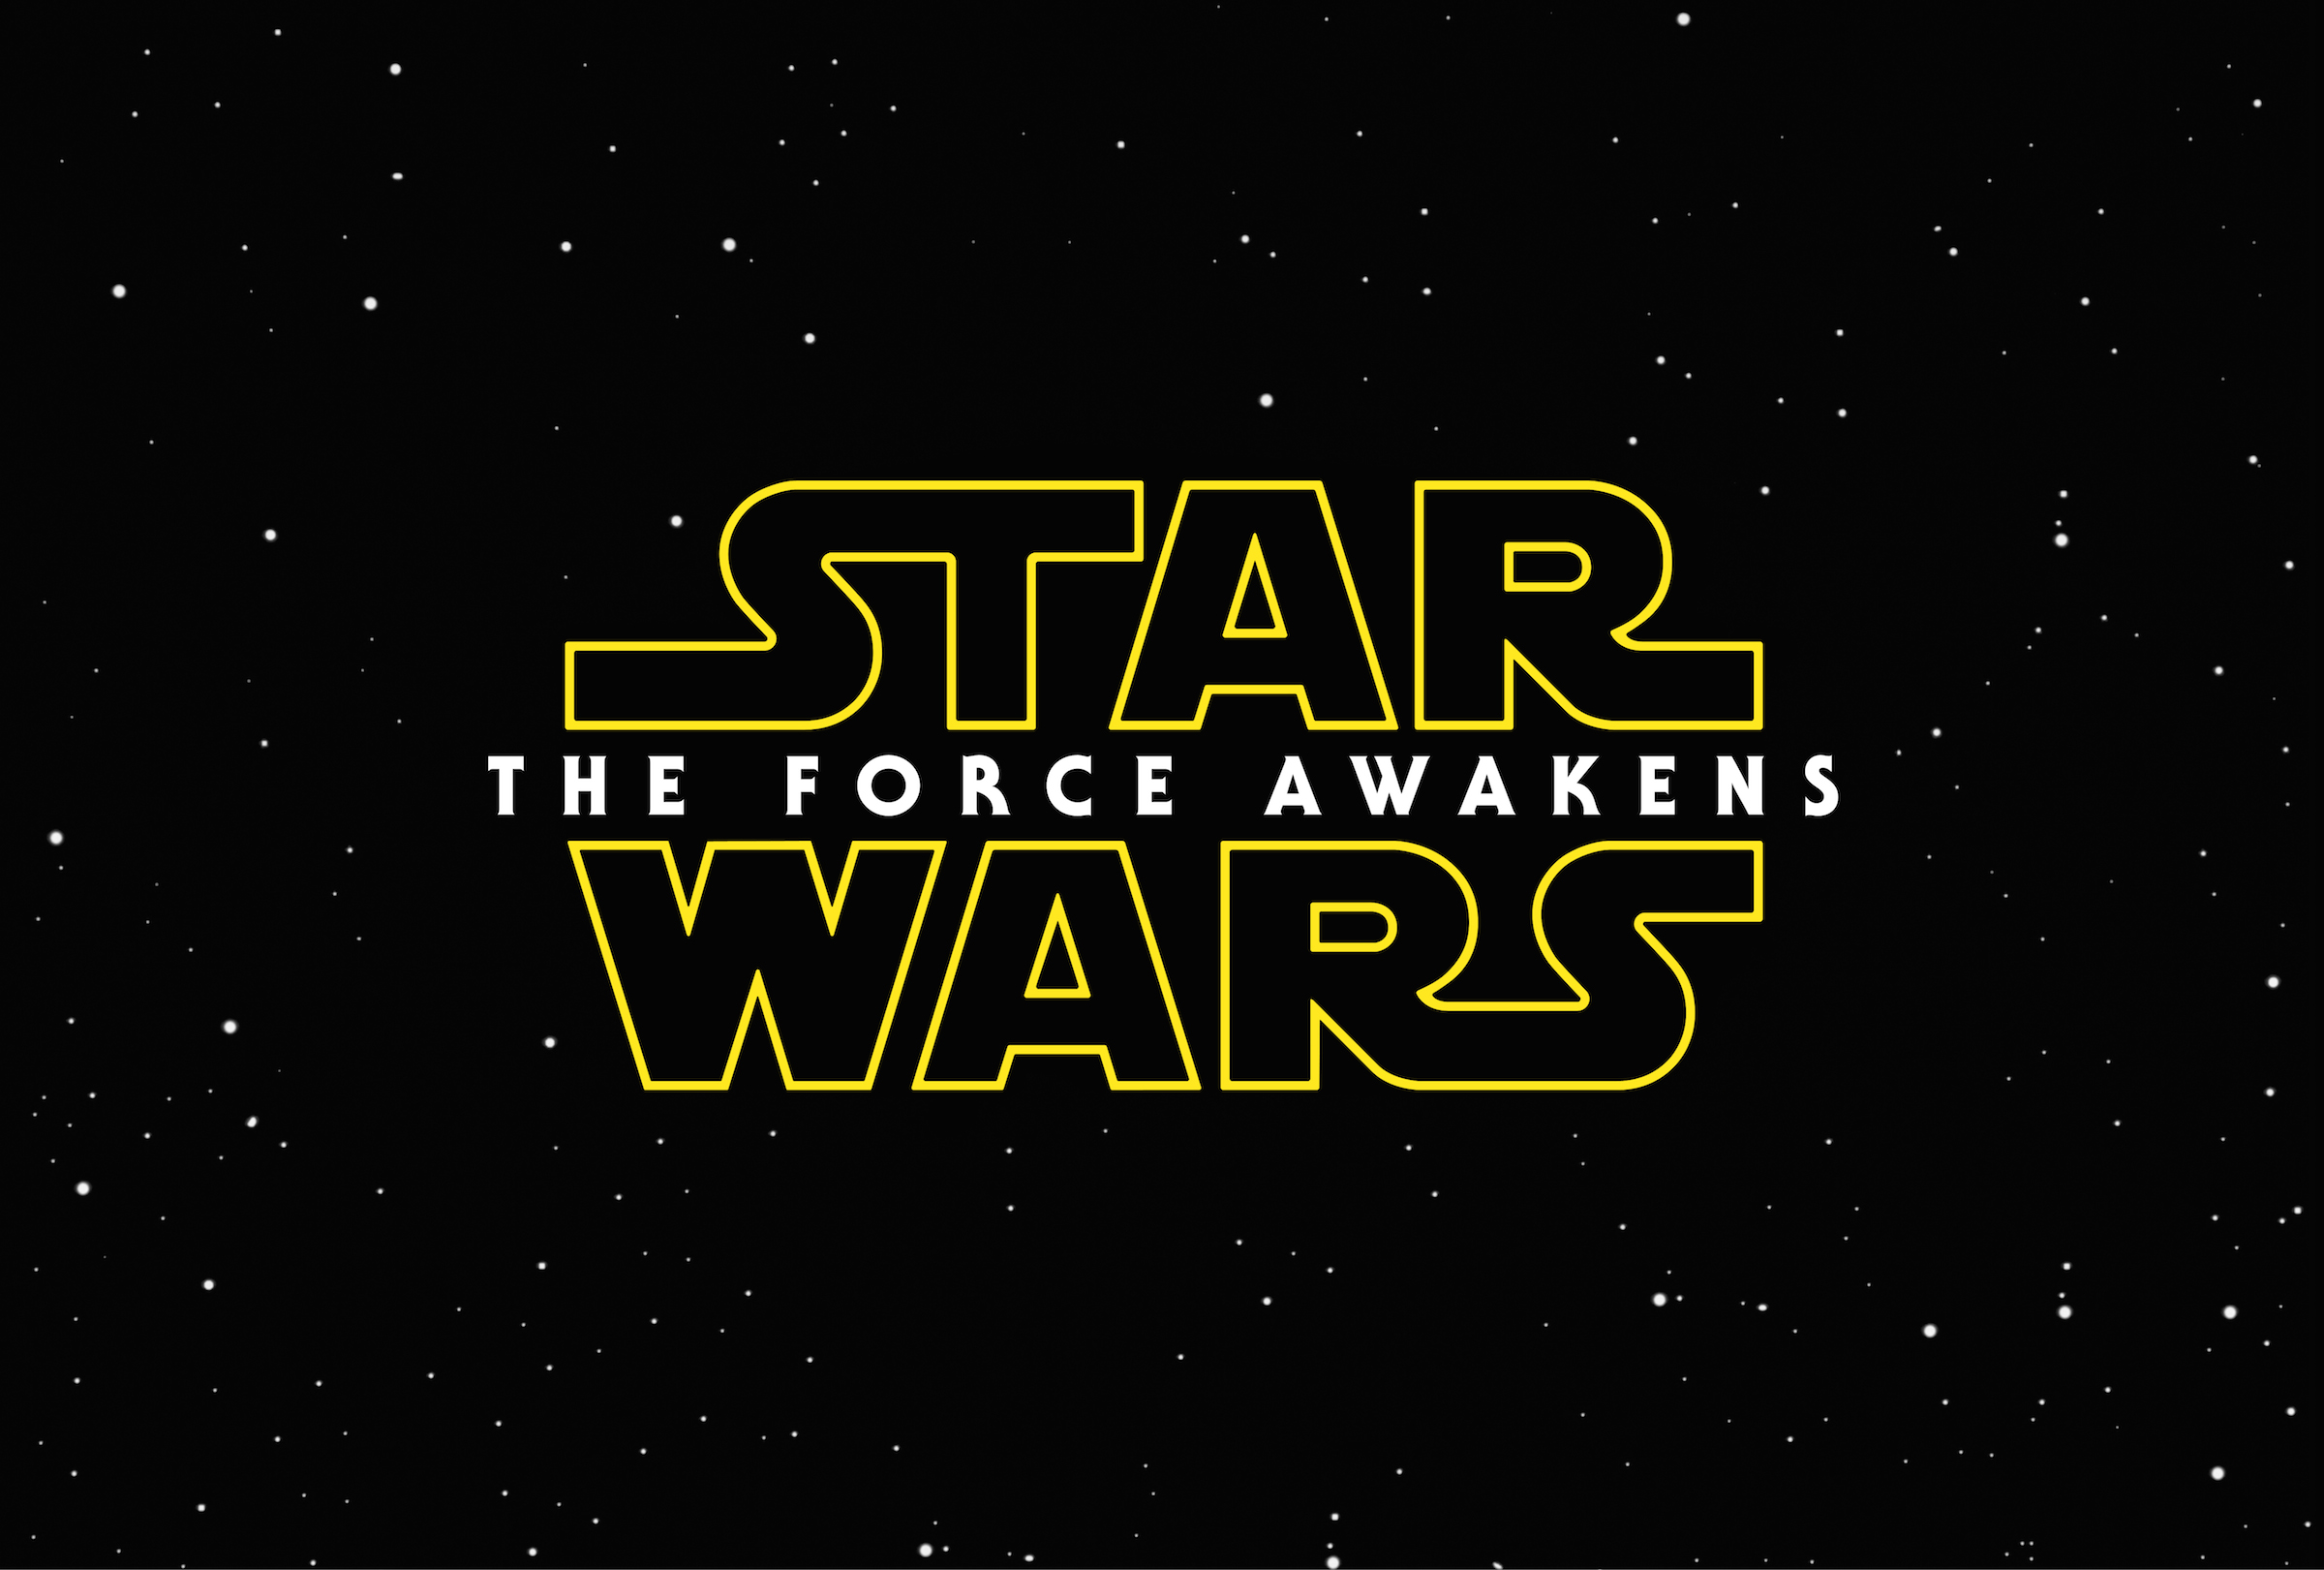 Star Wars Episode VII: The Force Awakens #4